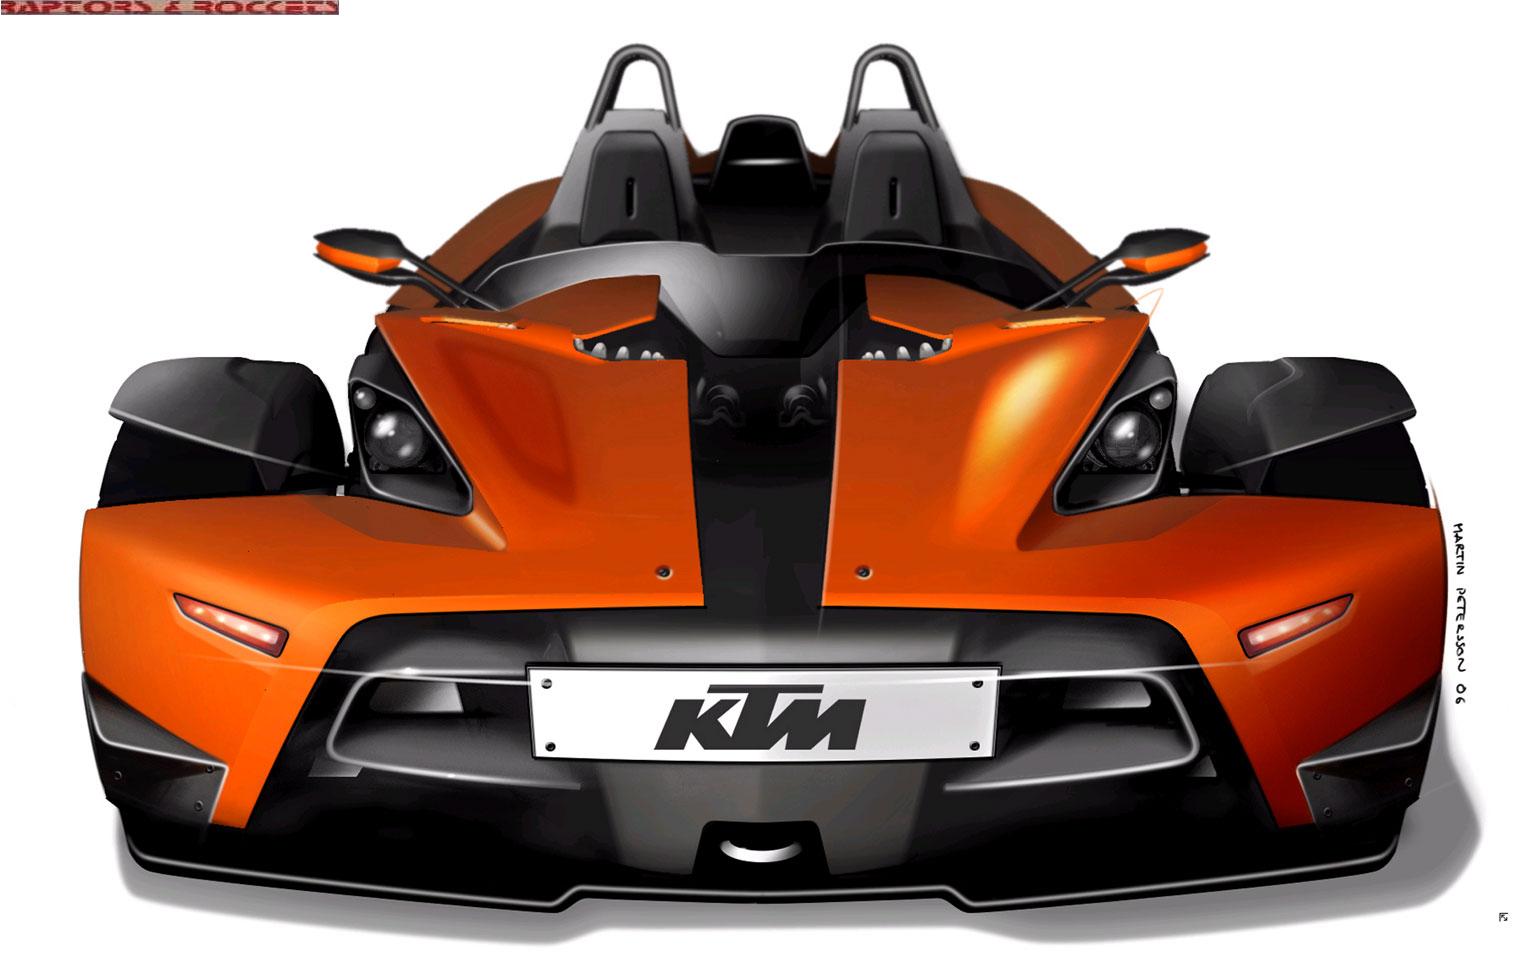 2011 KTM X-Bow R Race Car ~ Popular Automotive